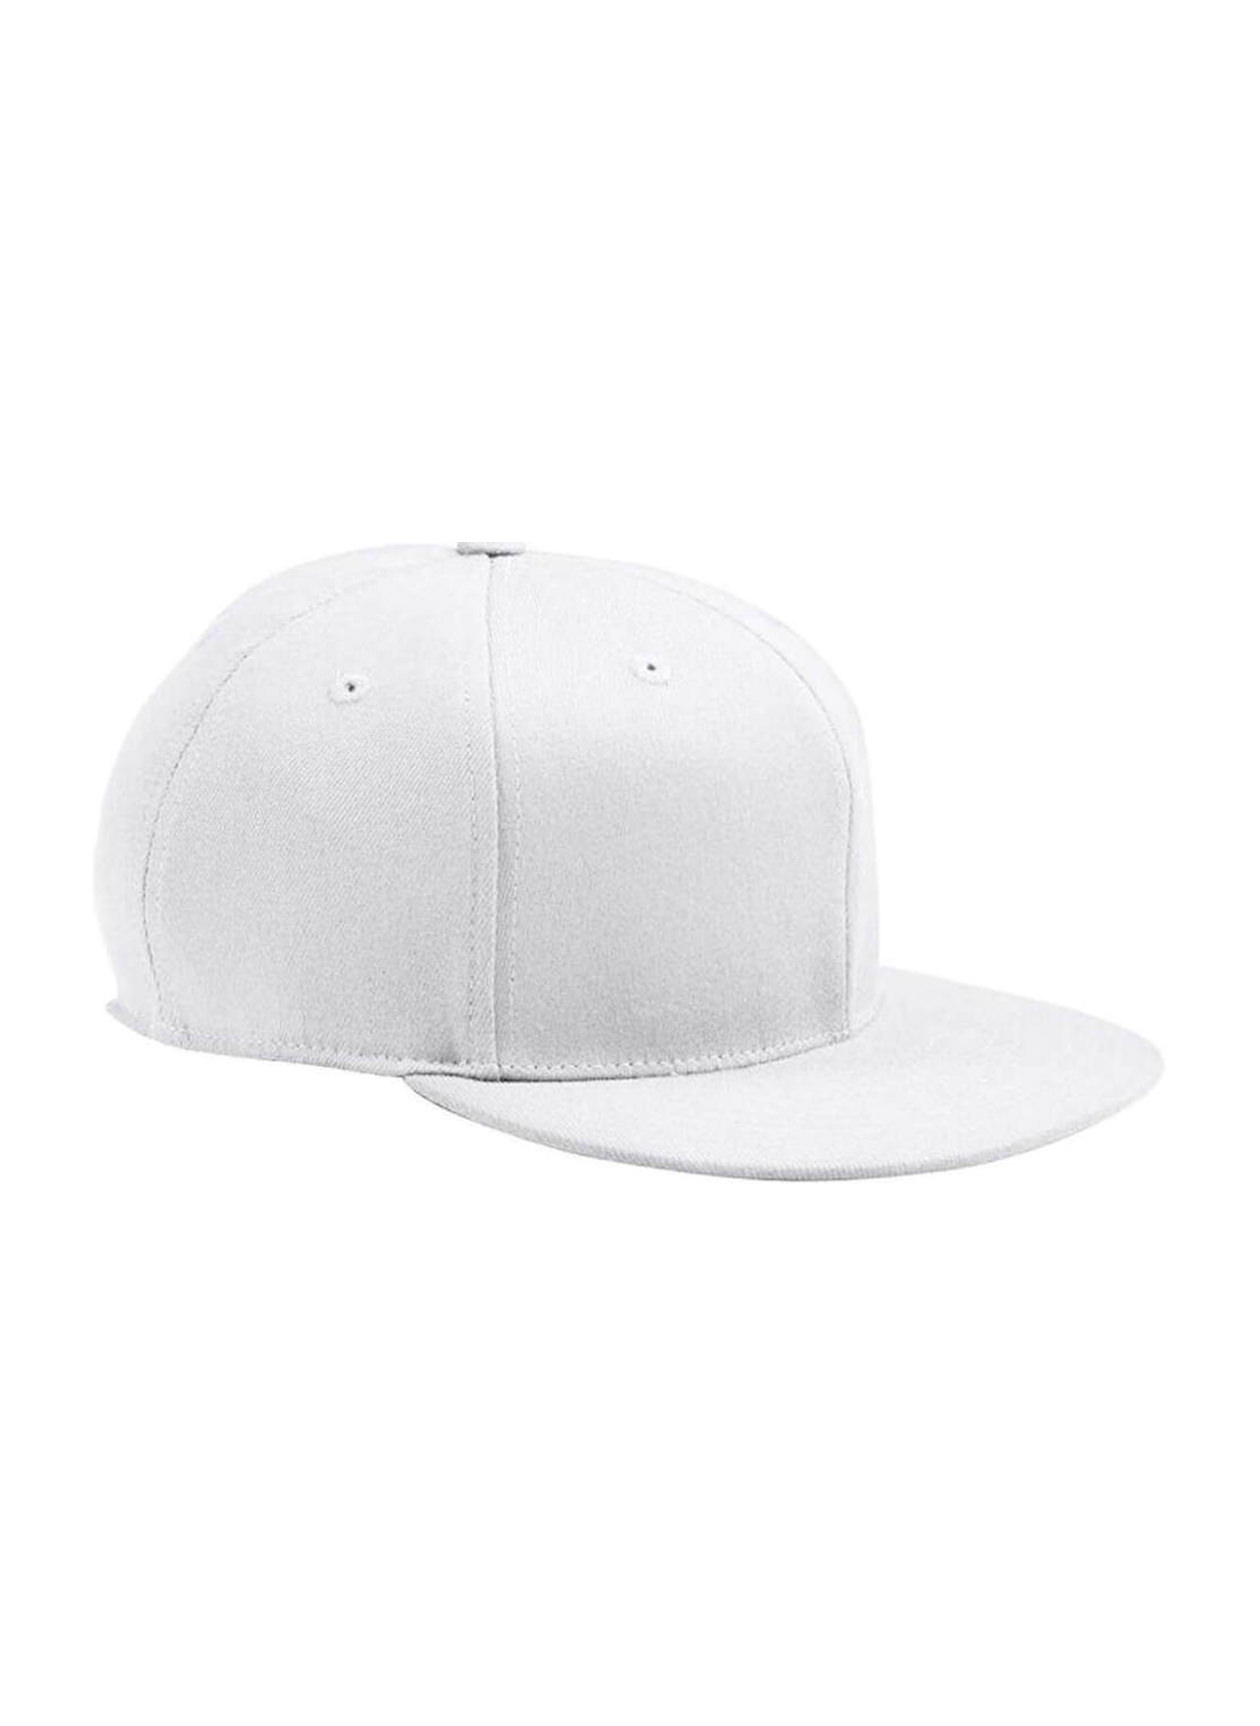 White Flexfit Premium 210 Fitted Hat | Flexfit